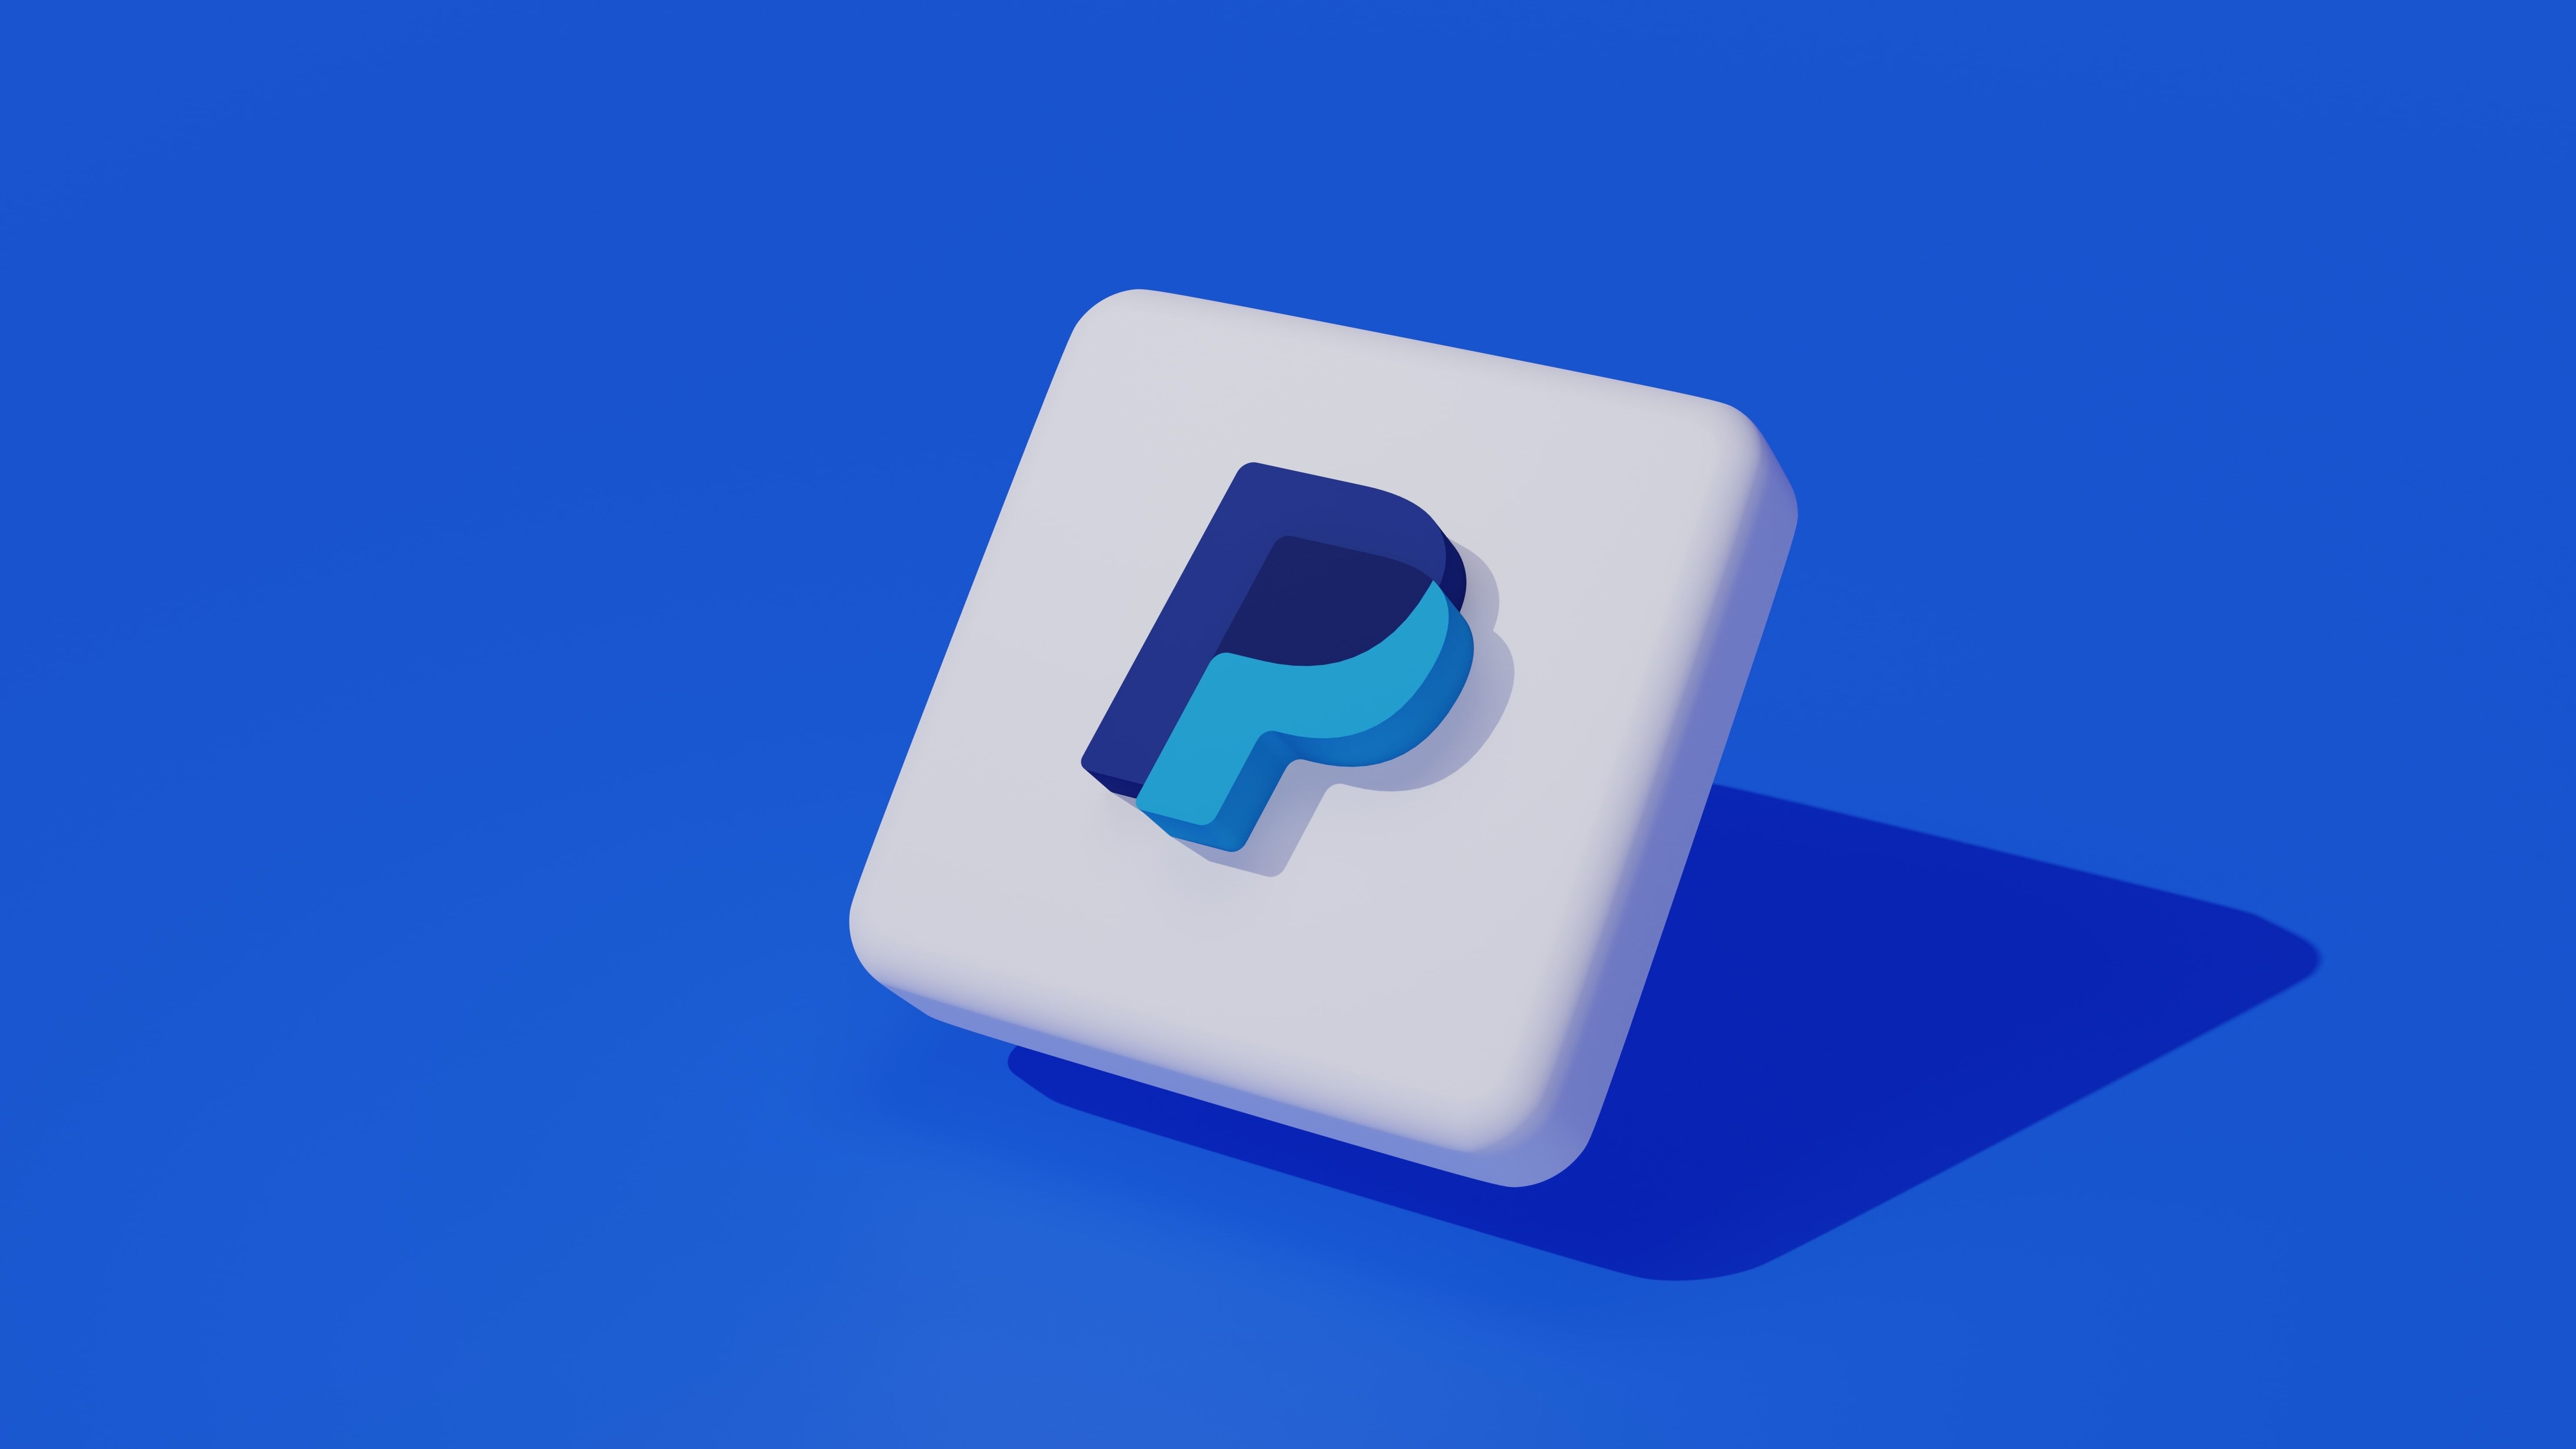 Logotipo 3D do PayPal com fundo azul